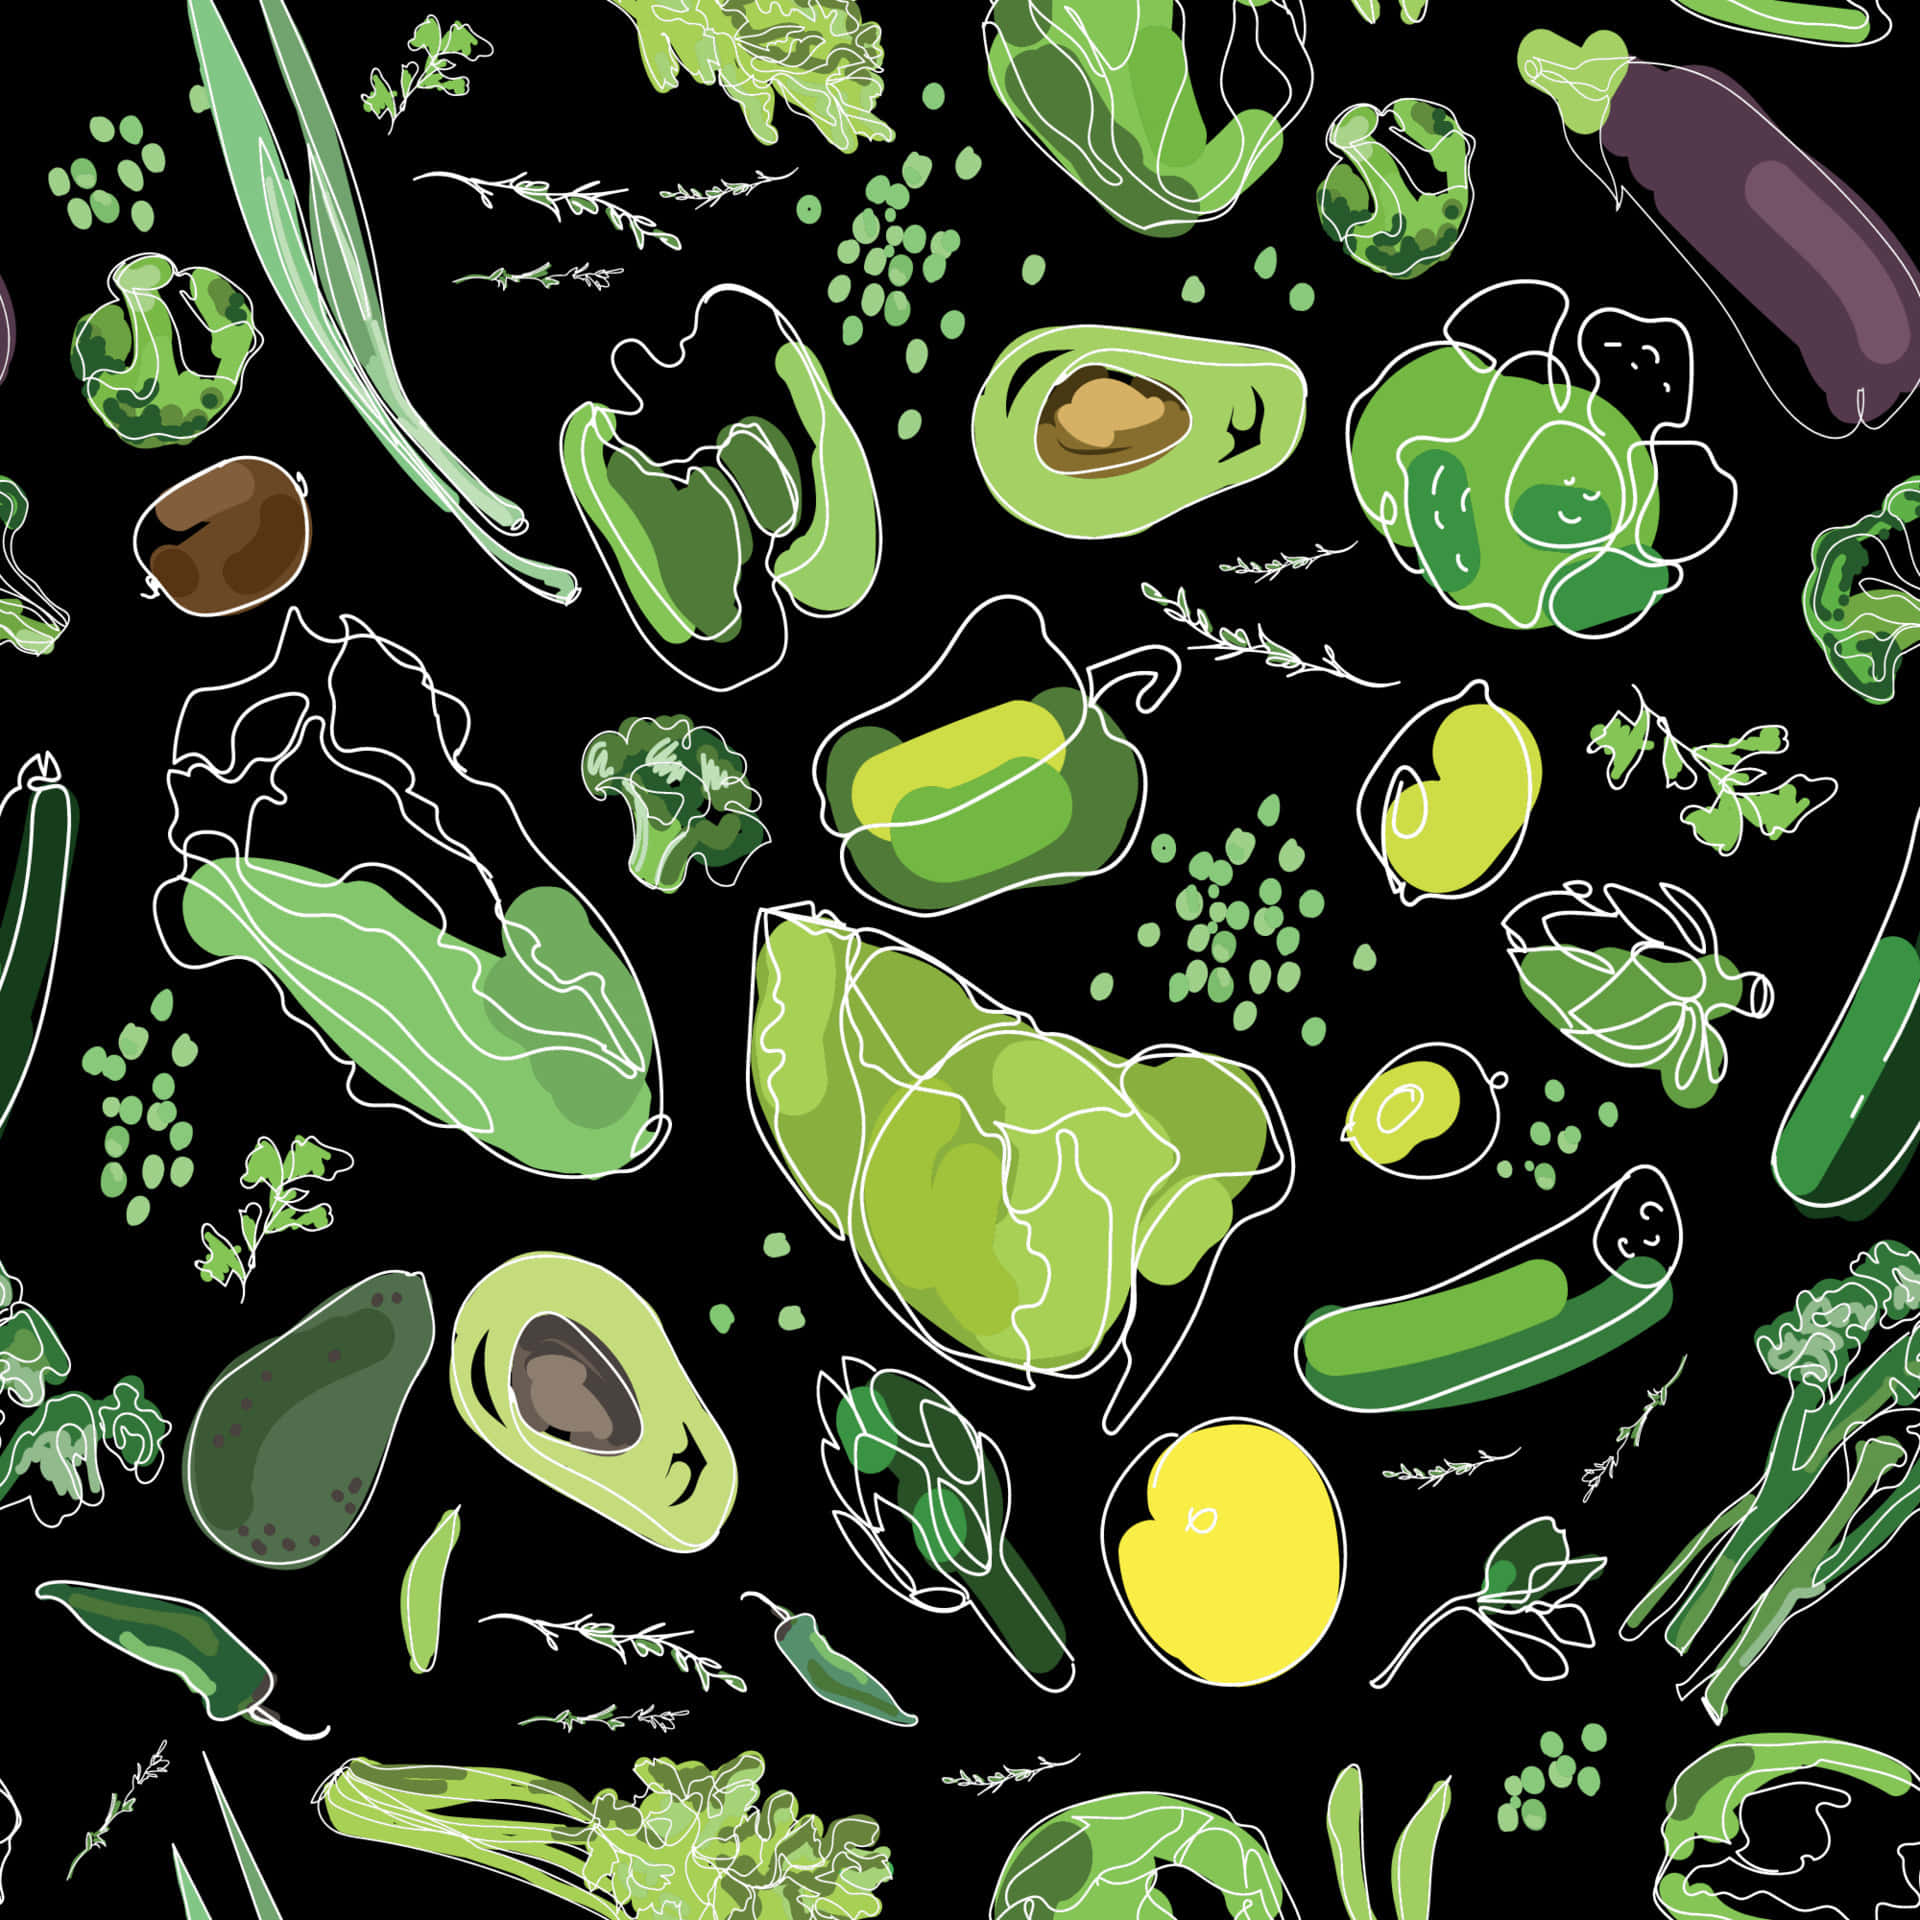 Digital Art Of Fruits And Vegetables Wallpaper